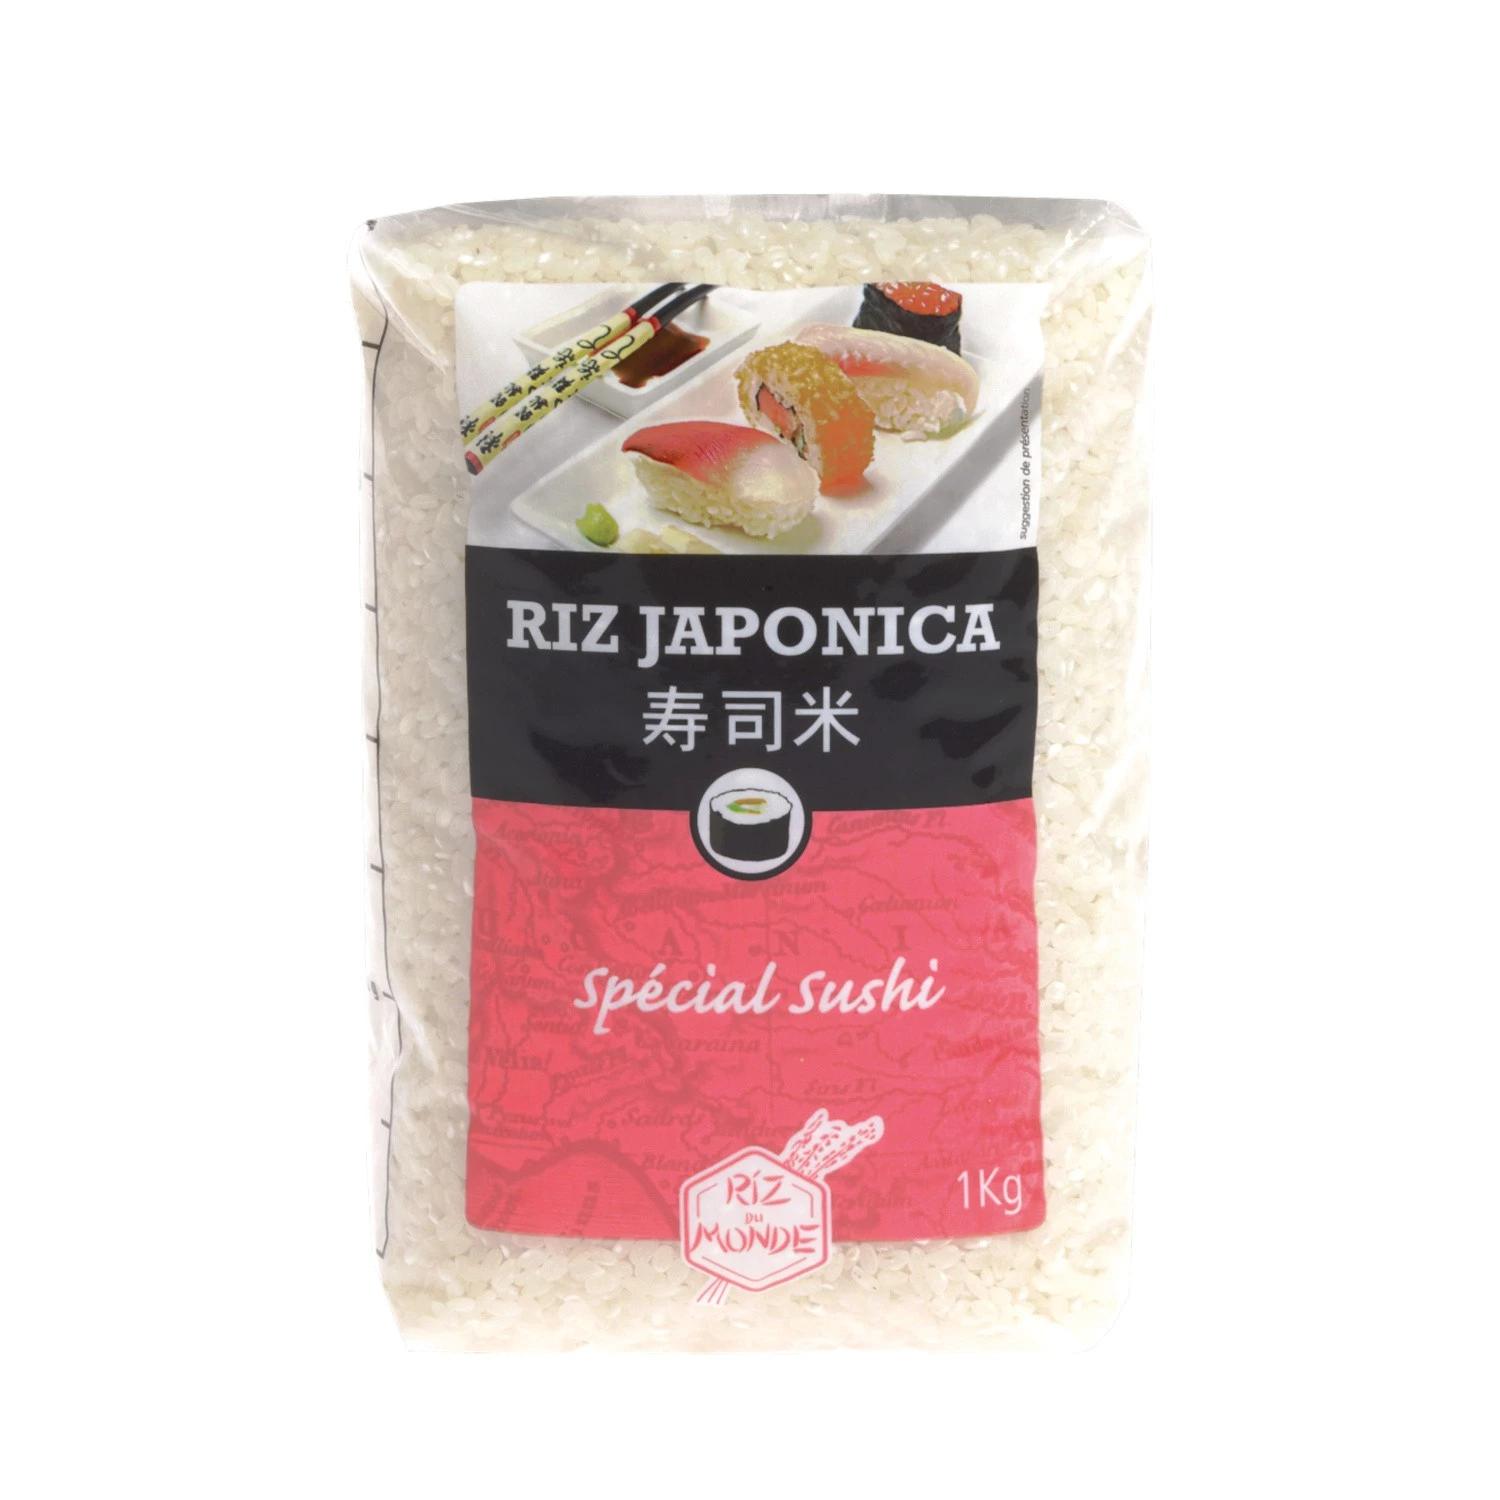 特制寿司米粳米 1kg - RICE OF THE WORLD